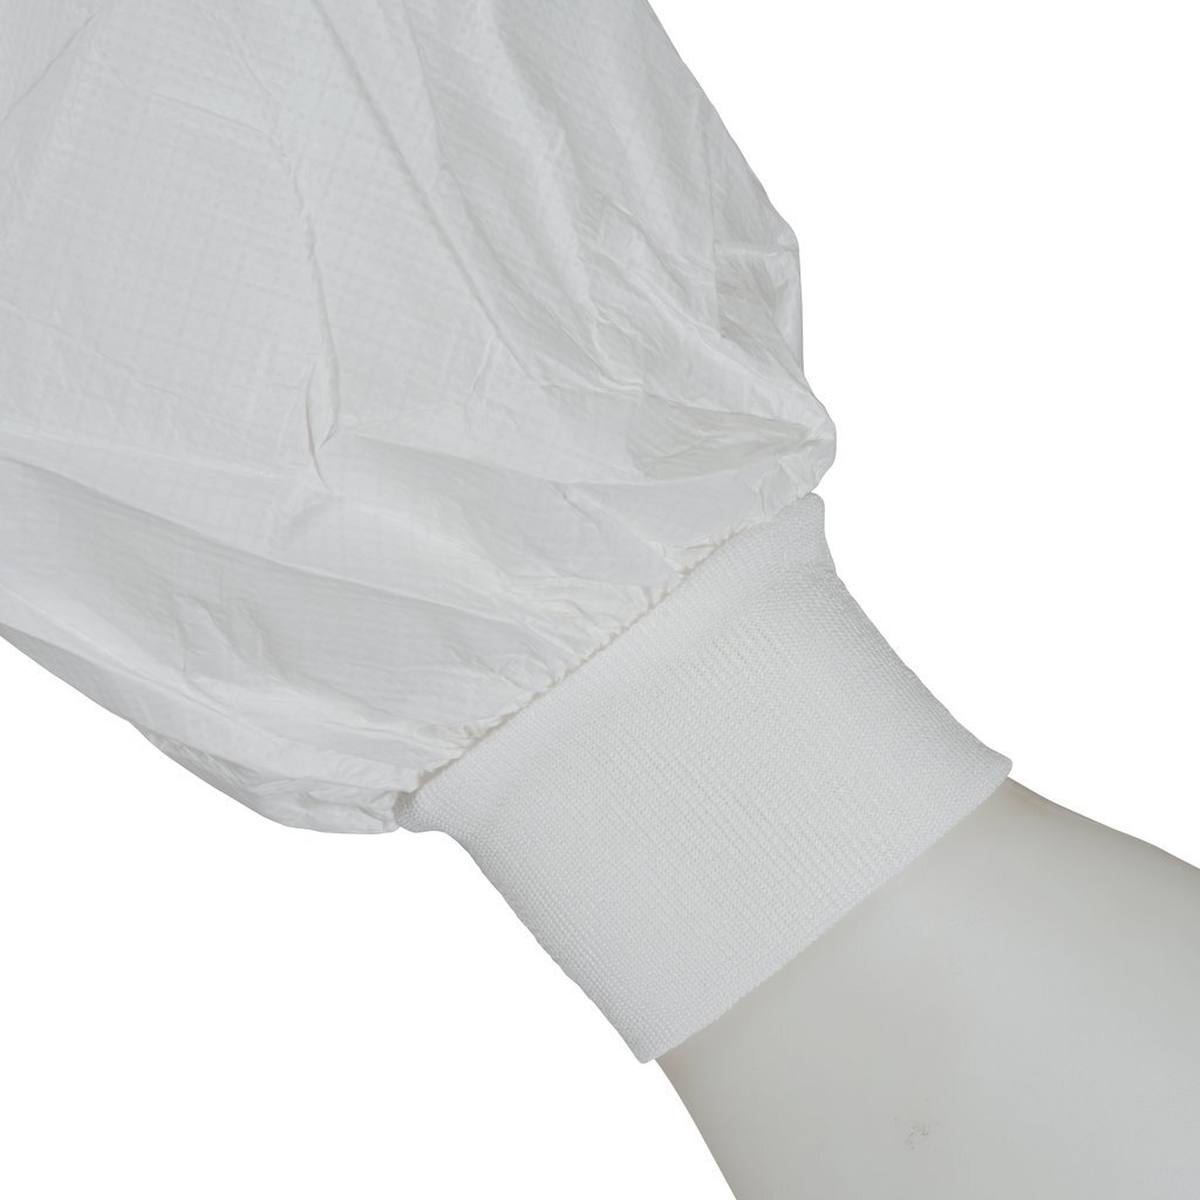 Abrigo 3M 4440, blanco, talla M, especialmente transpirable, muy ligero, con cremallera, puños de punto